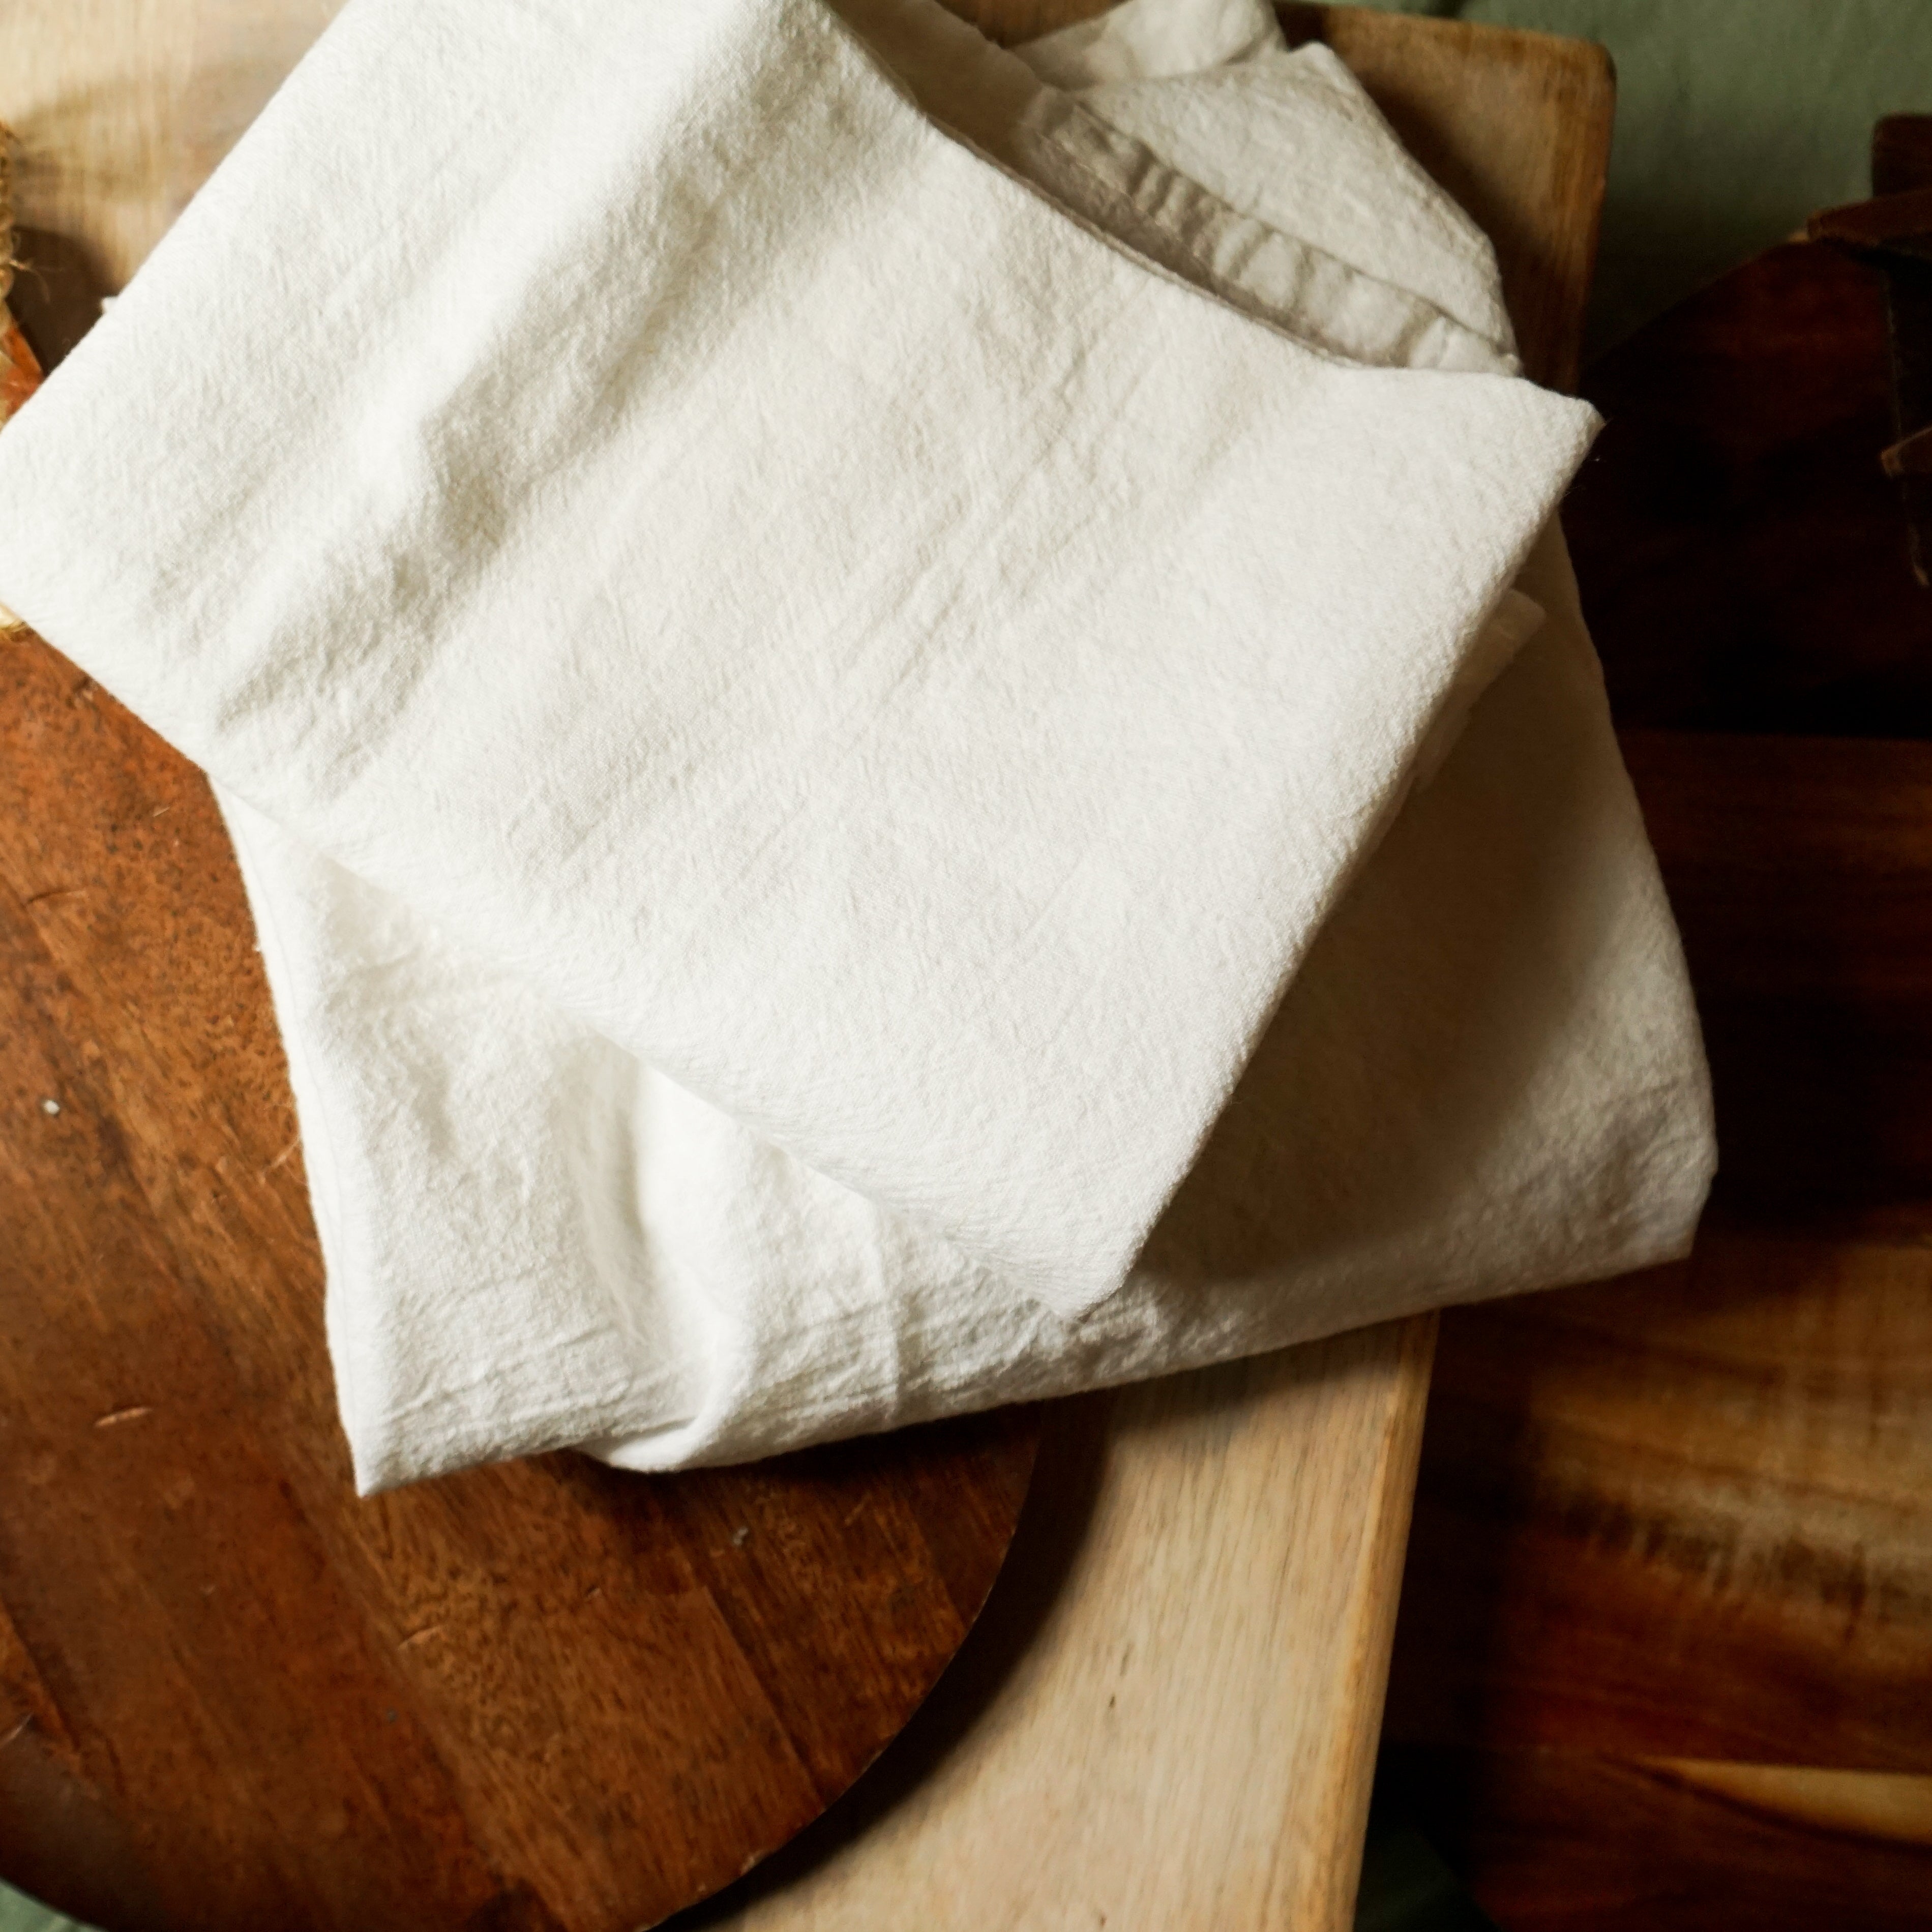 Flour Sack Towel Set of 3 - Blackstone's of Beacon Hill